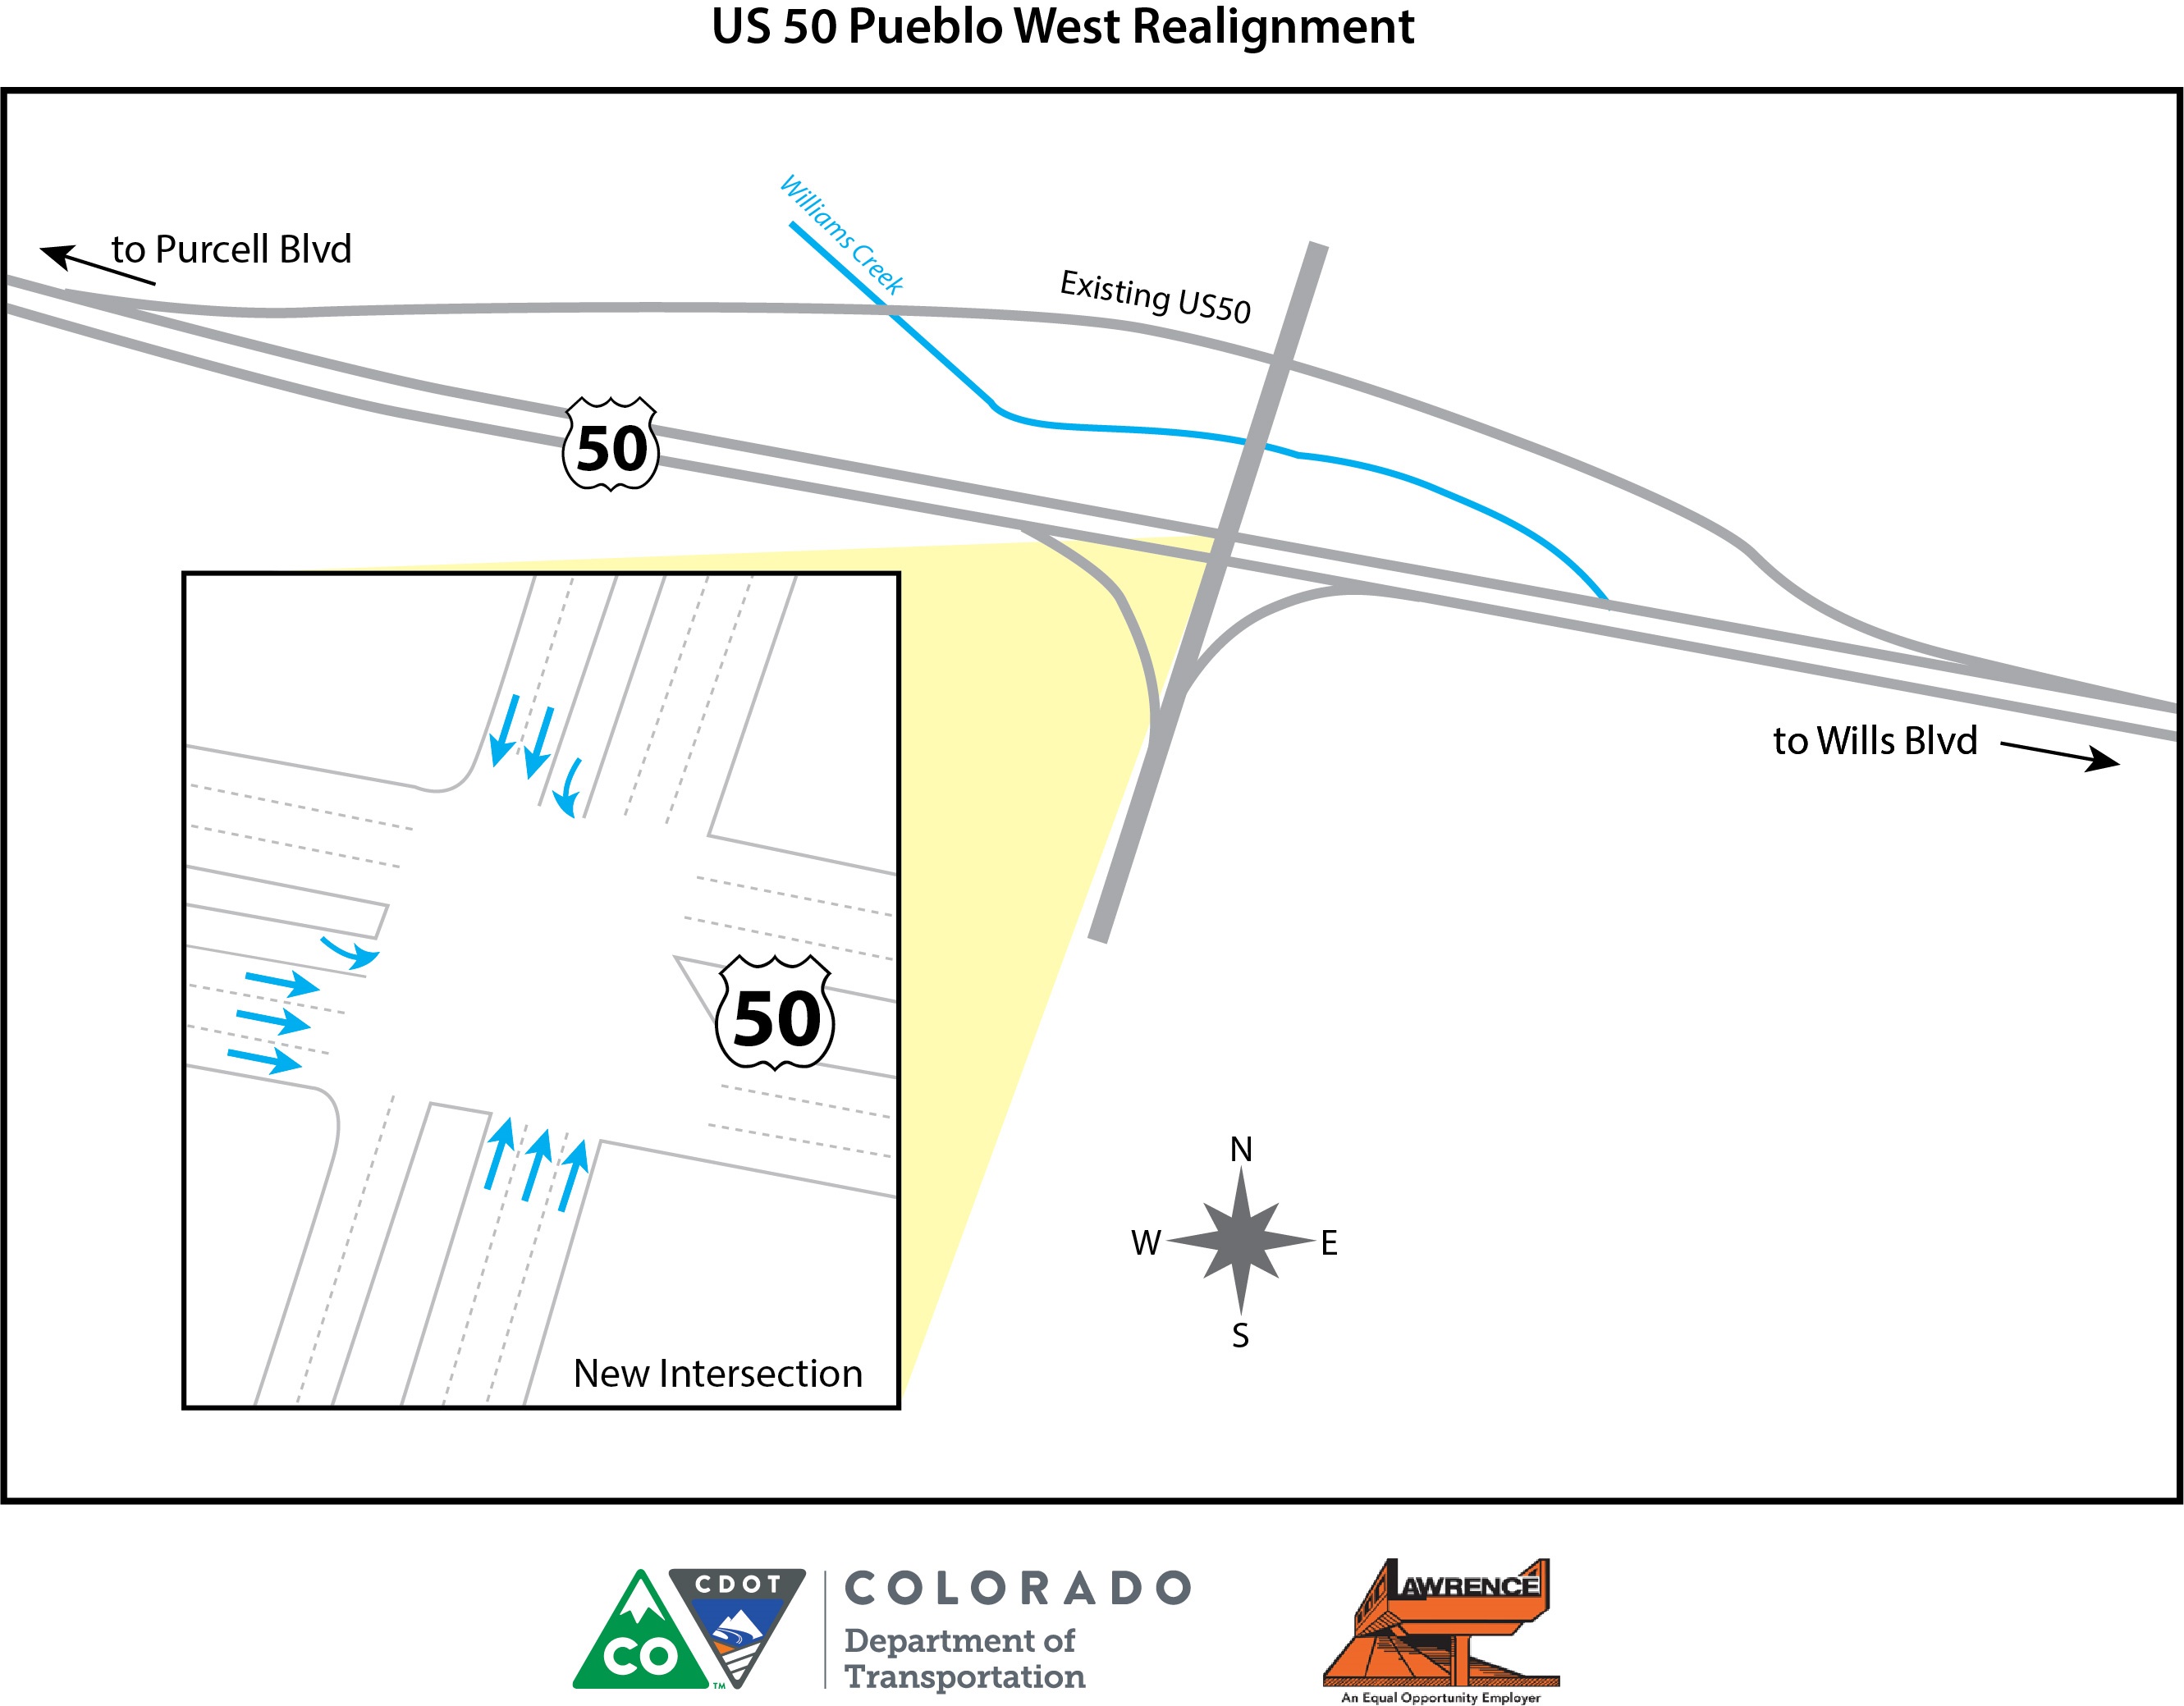 US 50 Pueblo West Realignment detail image